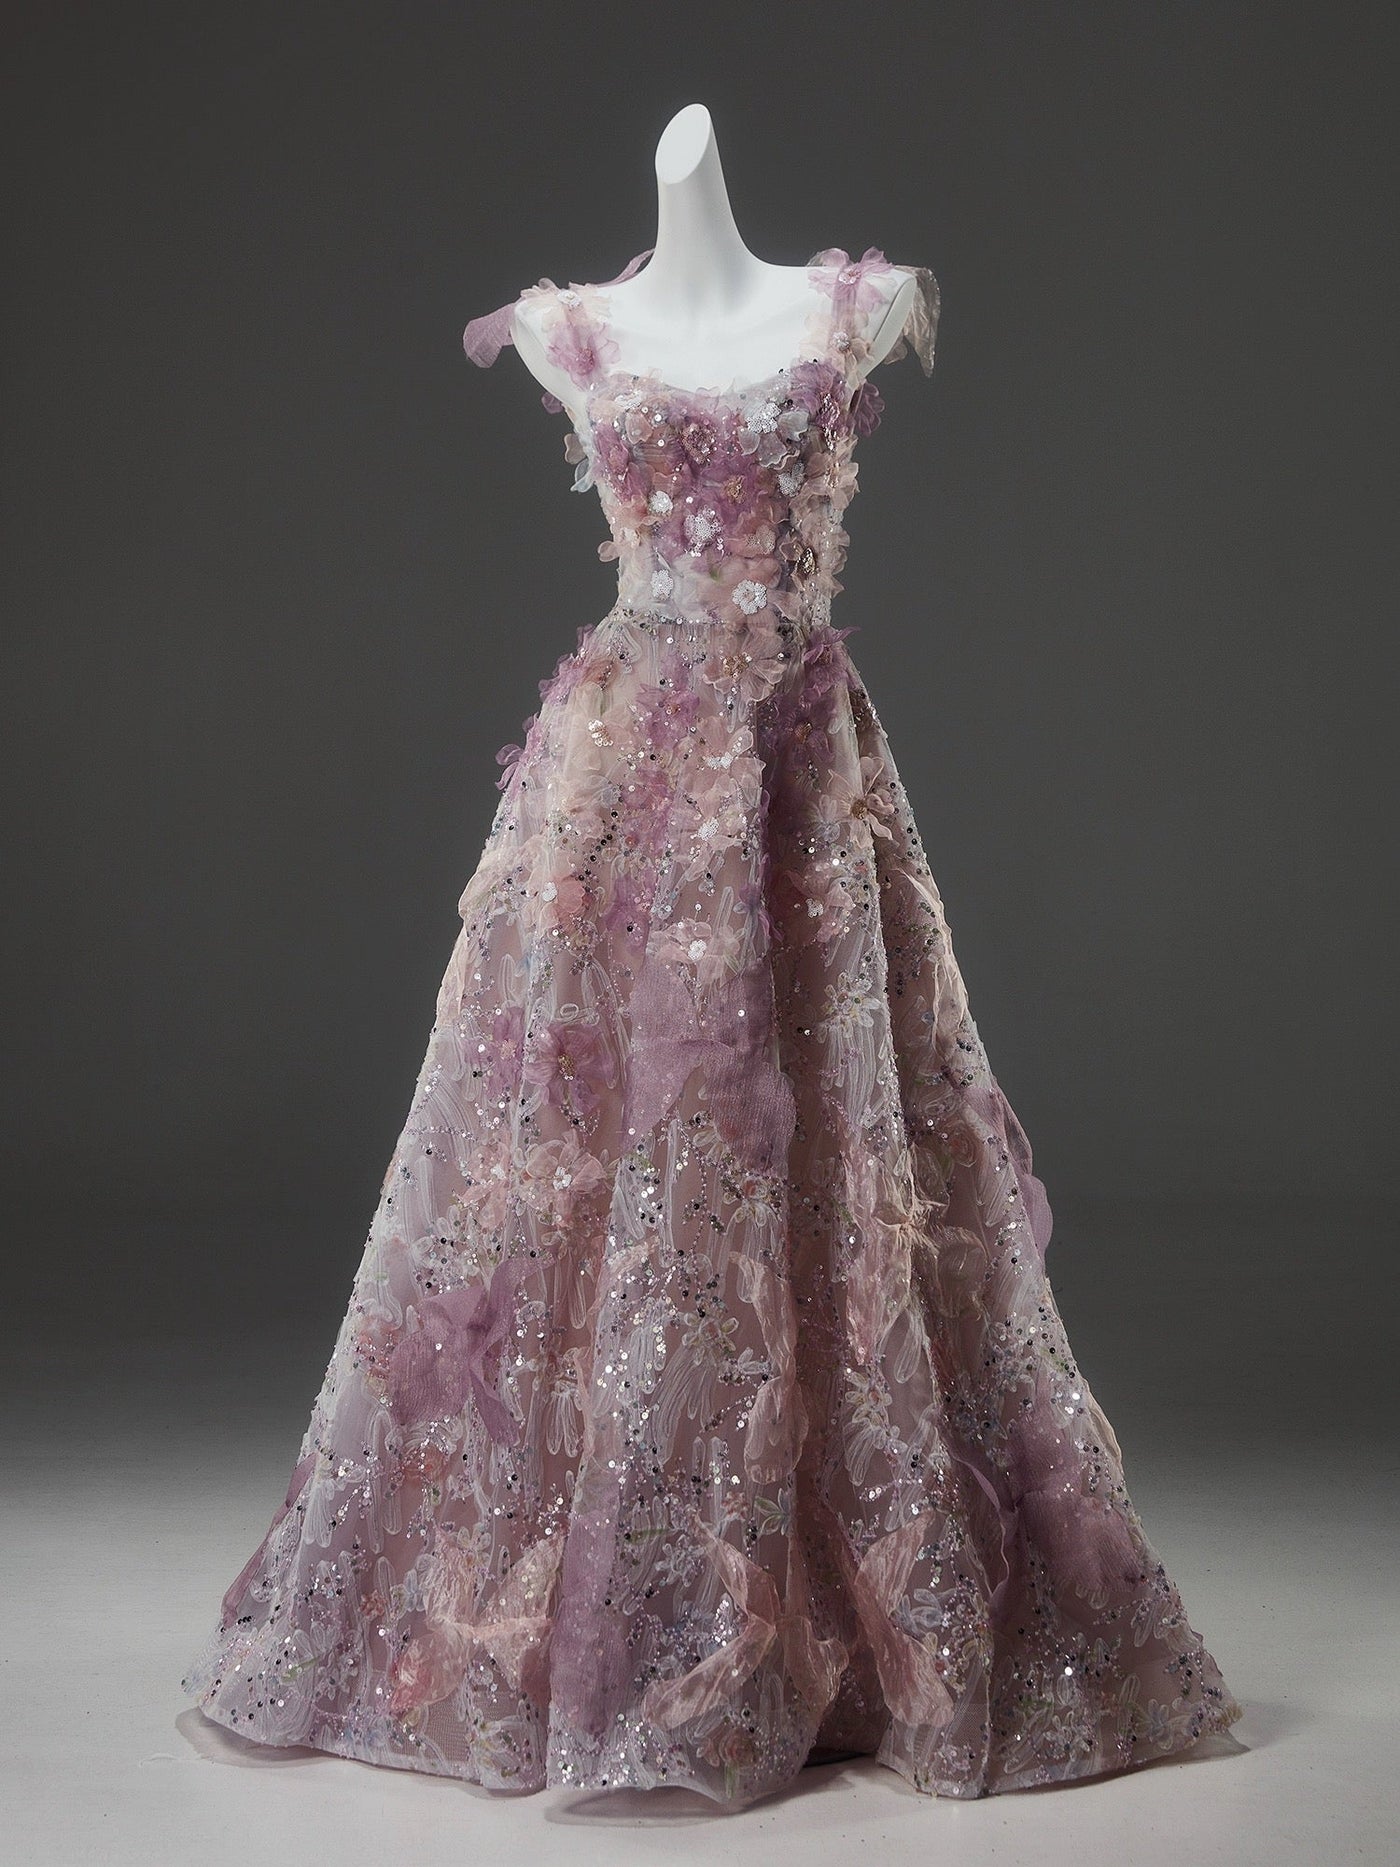 Blush Pink Floral Evening Dress - Corset Back Wedding Dress with Crystal Accents Plus Size - WonderlandByLilian